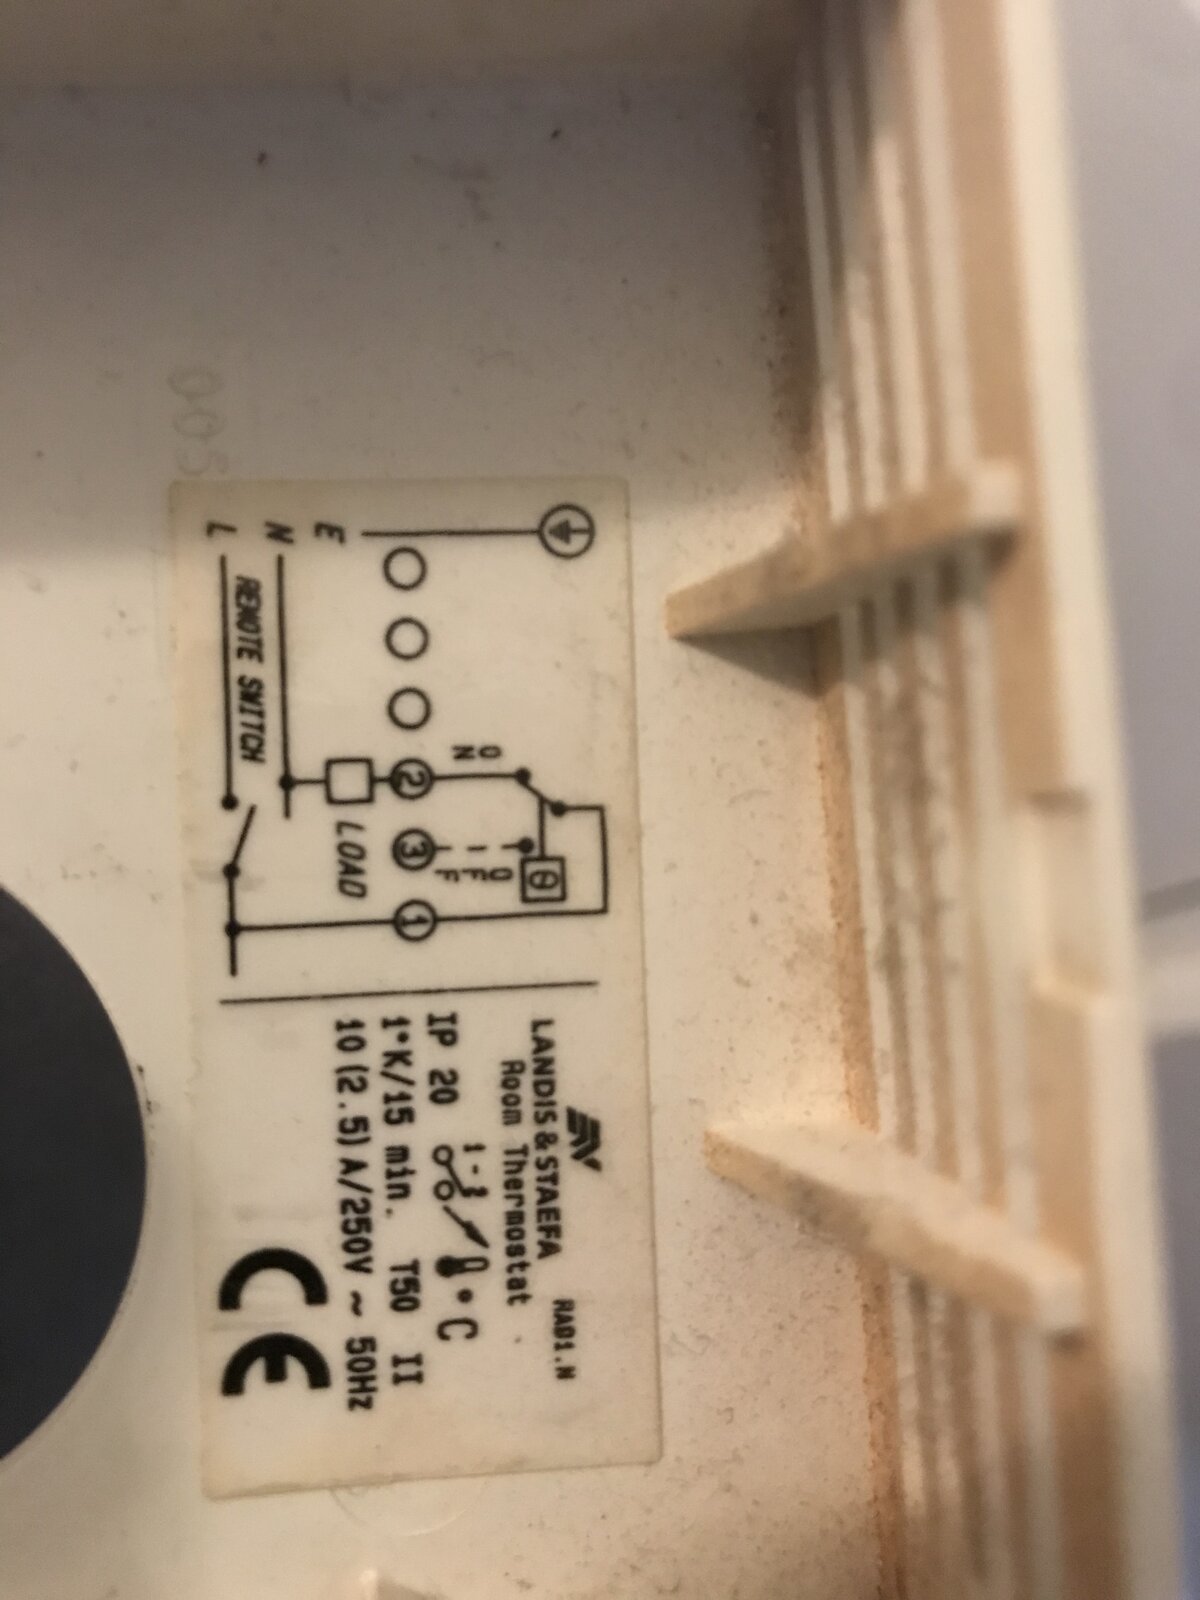 refrigerator - Fridge Thermostat Replacement - Terminals Differ. Wiring  Help - RLA36G.1 (UK) - Home Improvement Stack Exchange